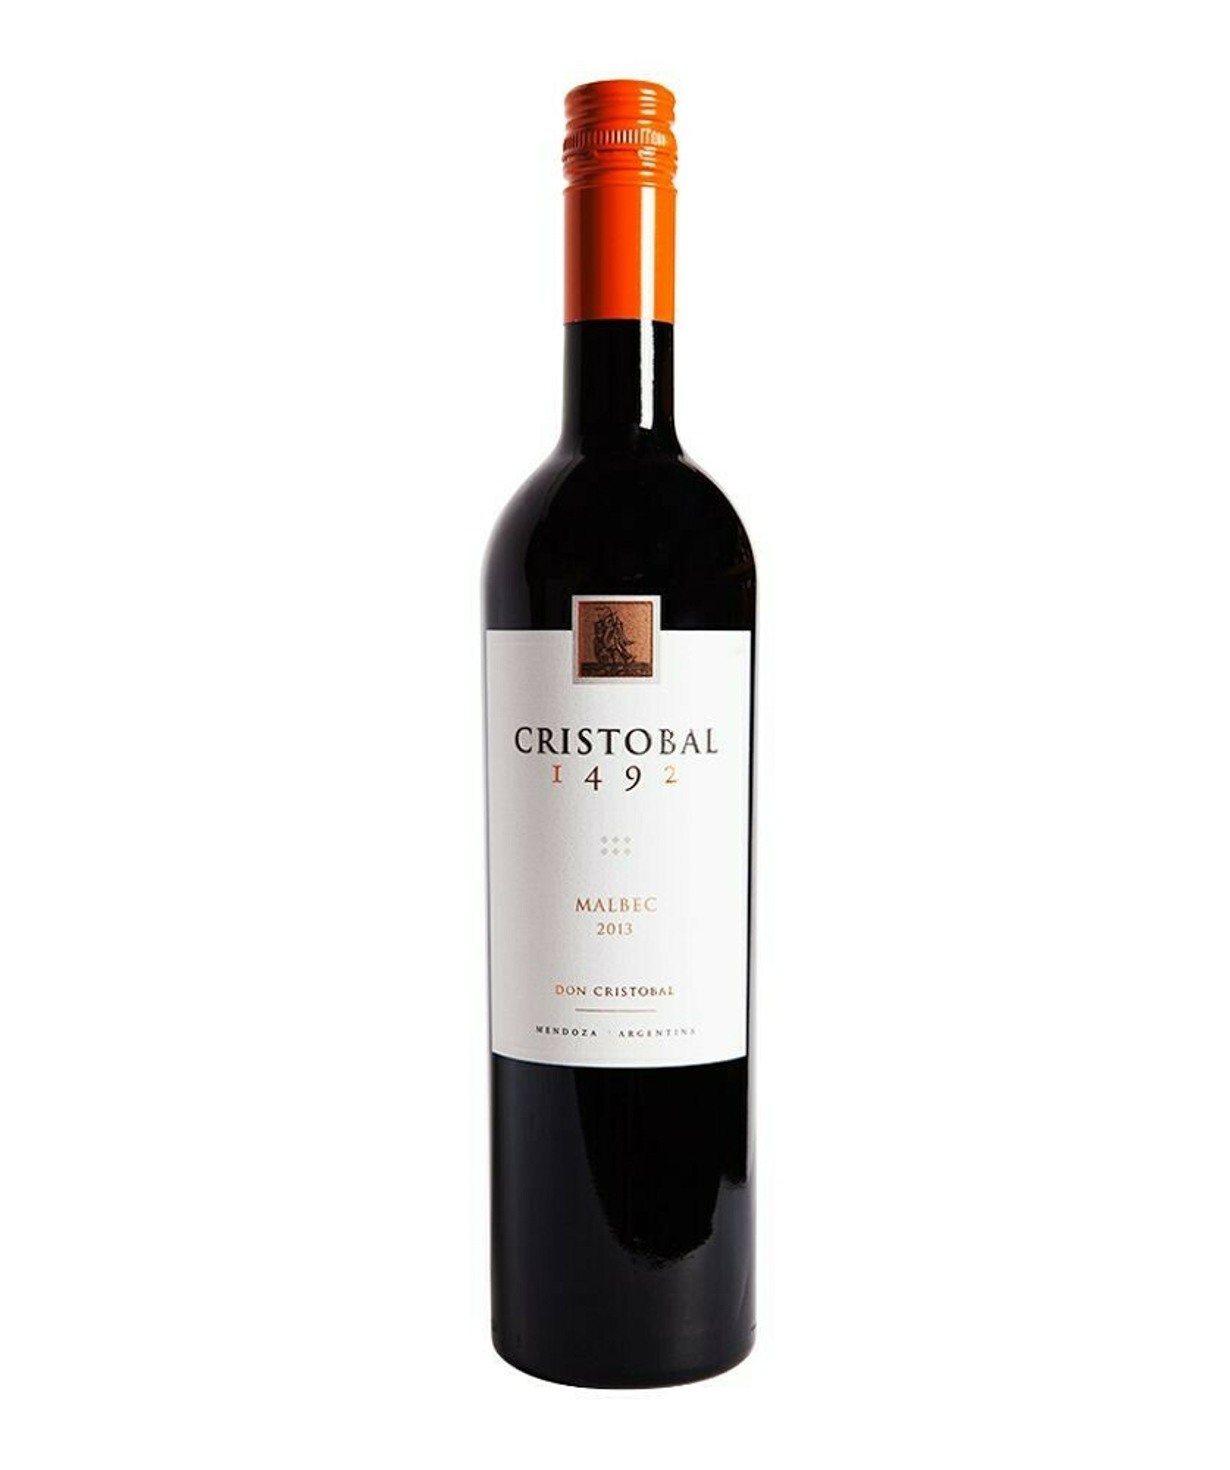 Գինի «Cristobal 1492 Malbec» կարմիր, չոր 750մլ